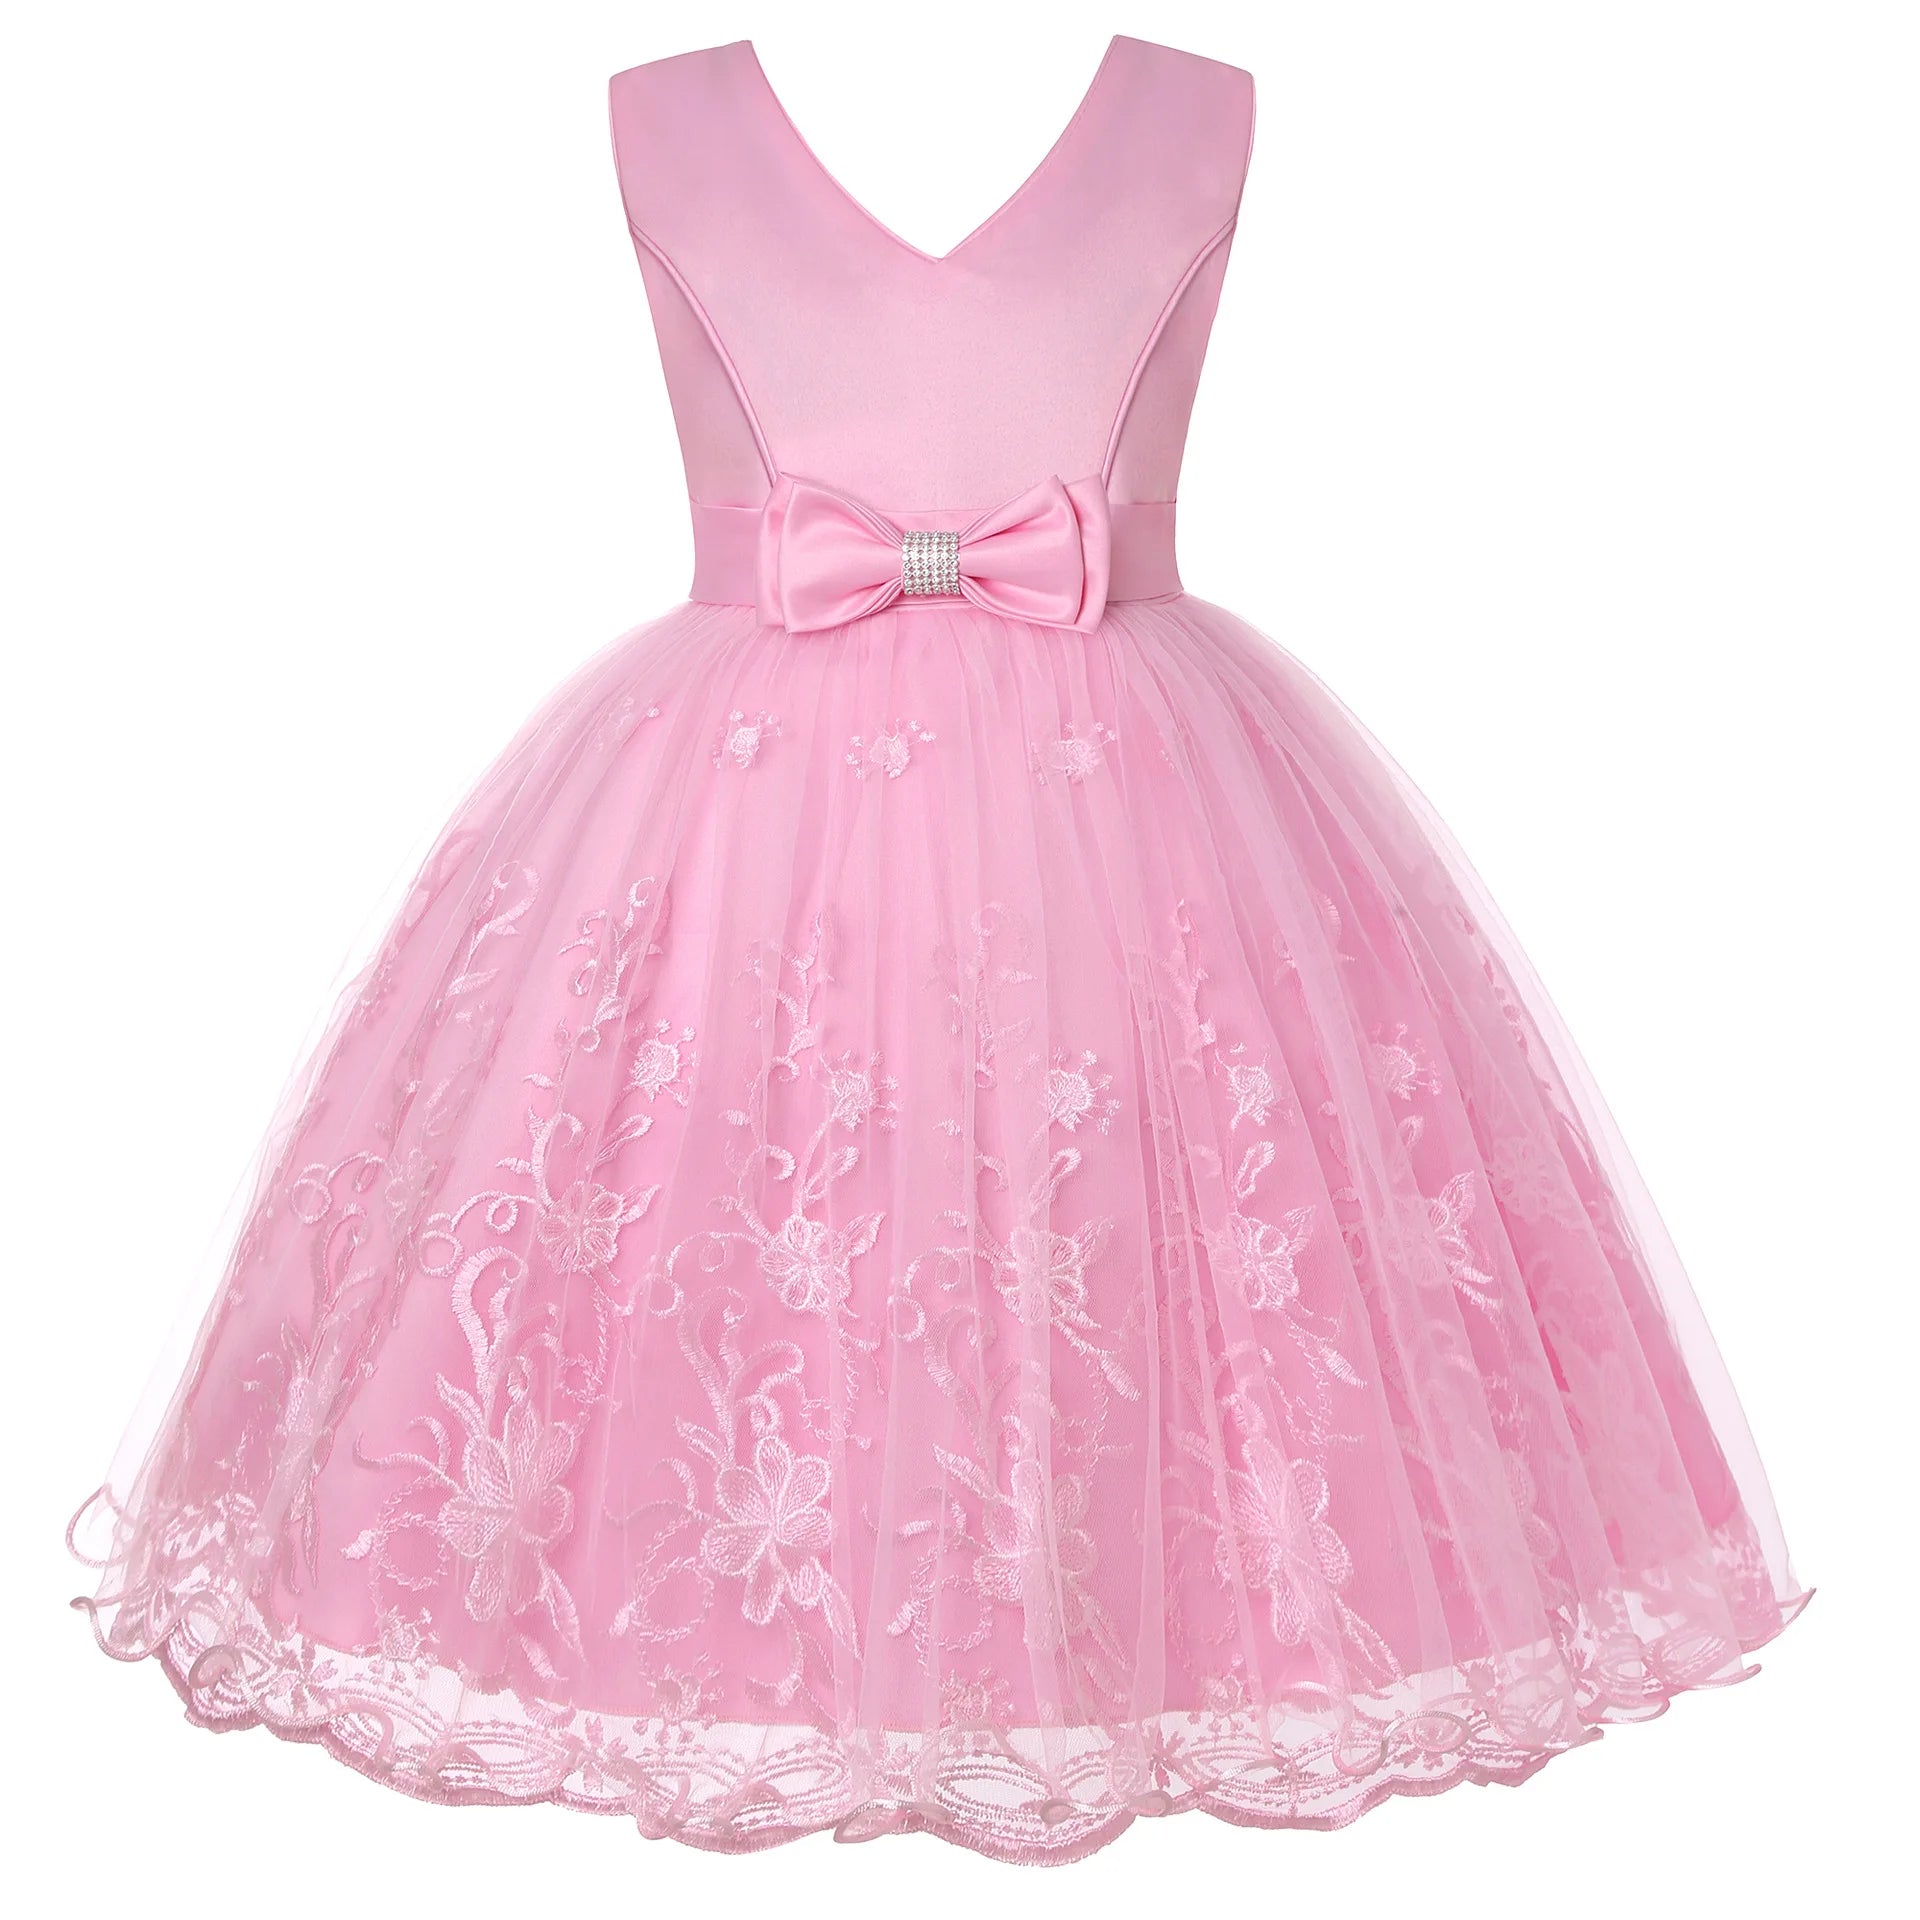 Causal Baby Girl Tutu Princess Dress Pink by Baby Minaj Cruz